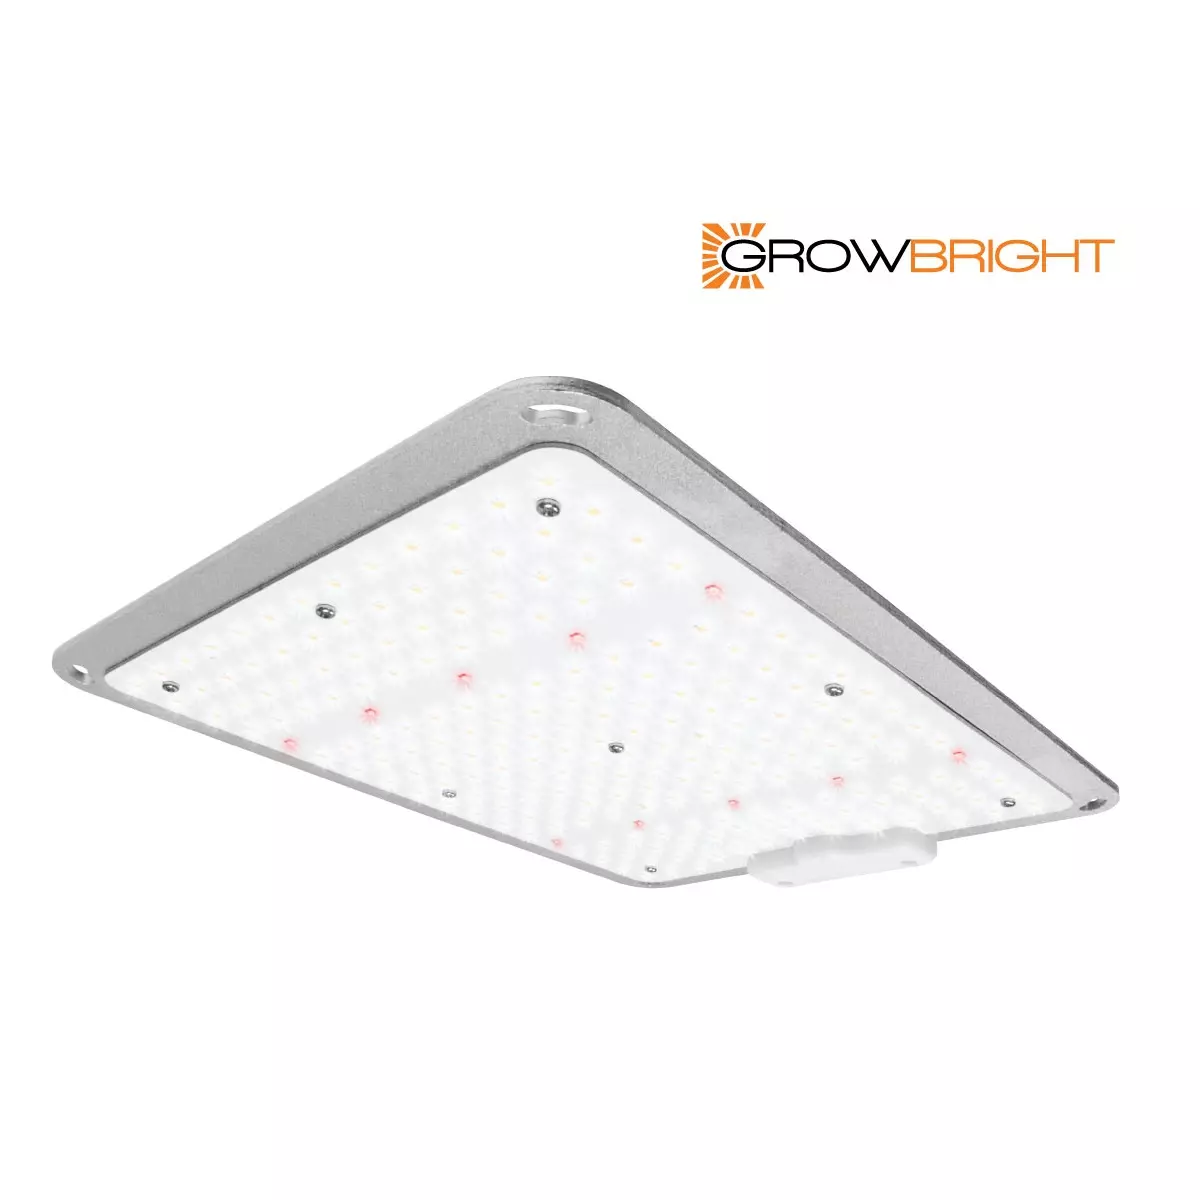 GrowBright SS-1000 100w LED Grow Light